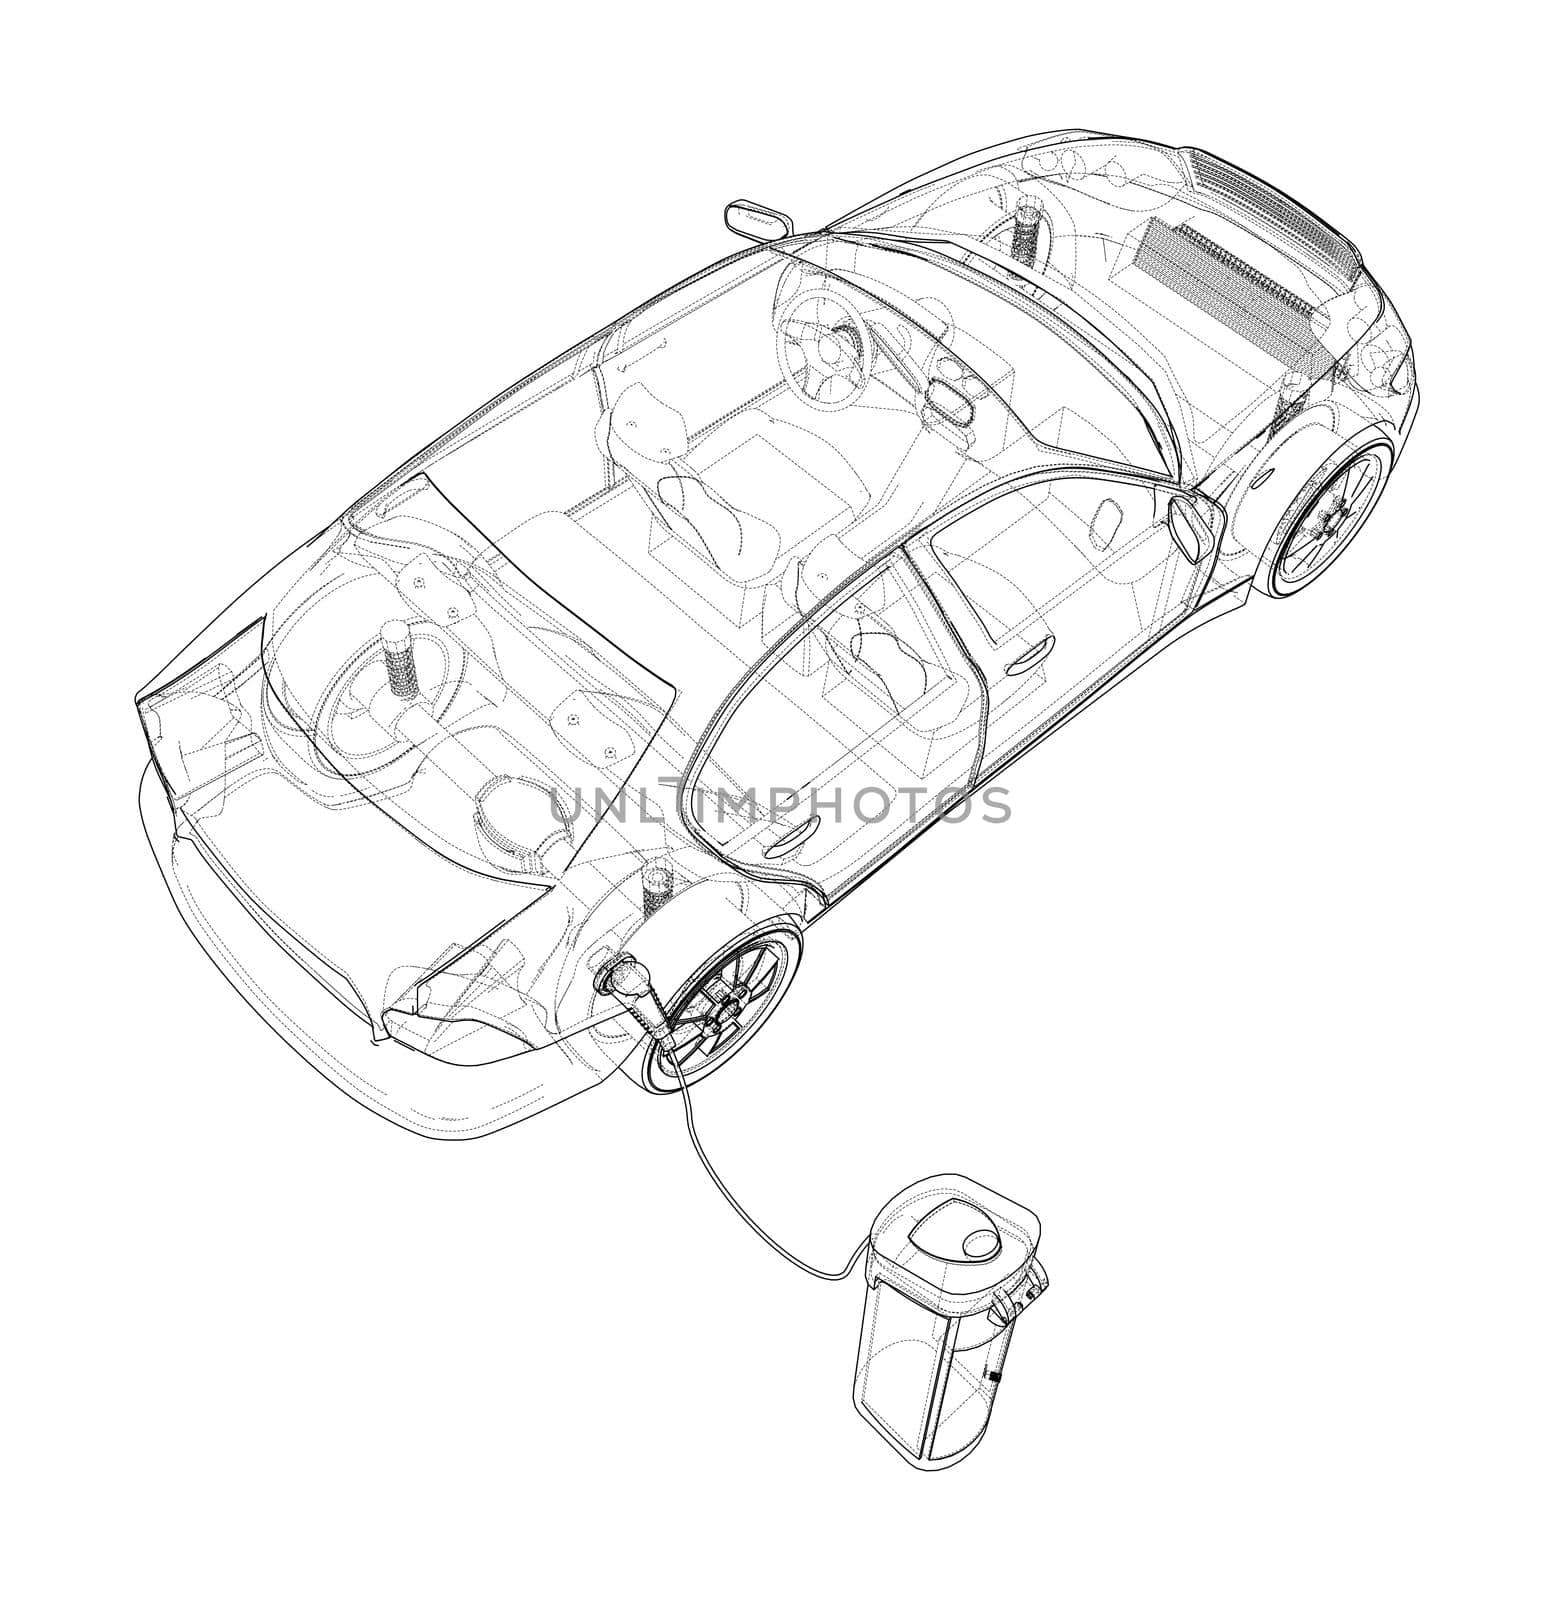 Electric Vehicle Charging Station Sketch. 3d illustration